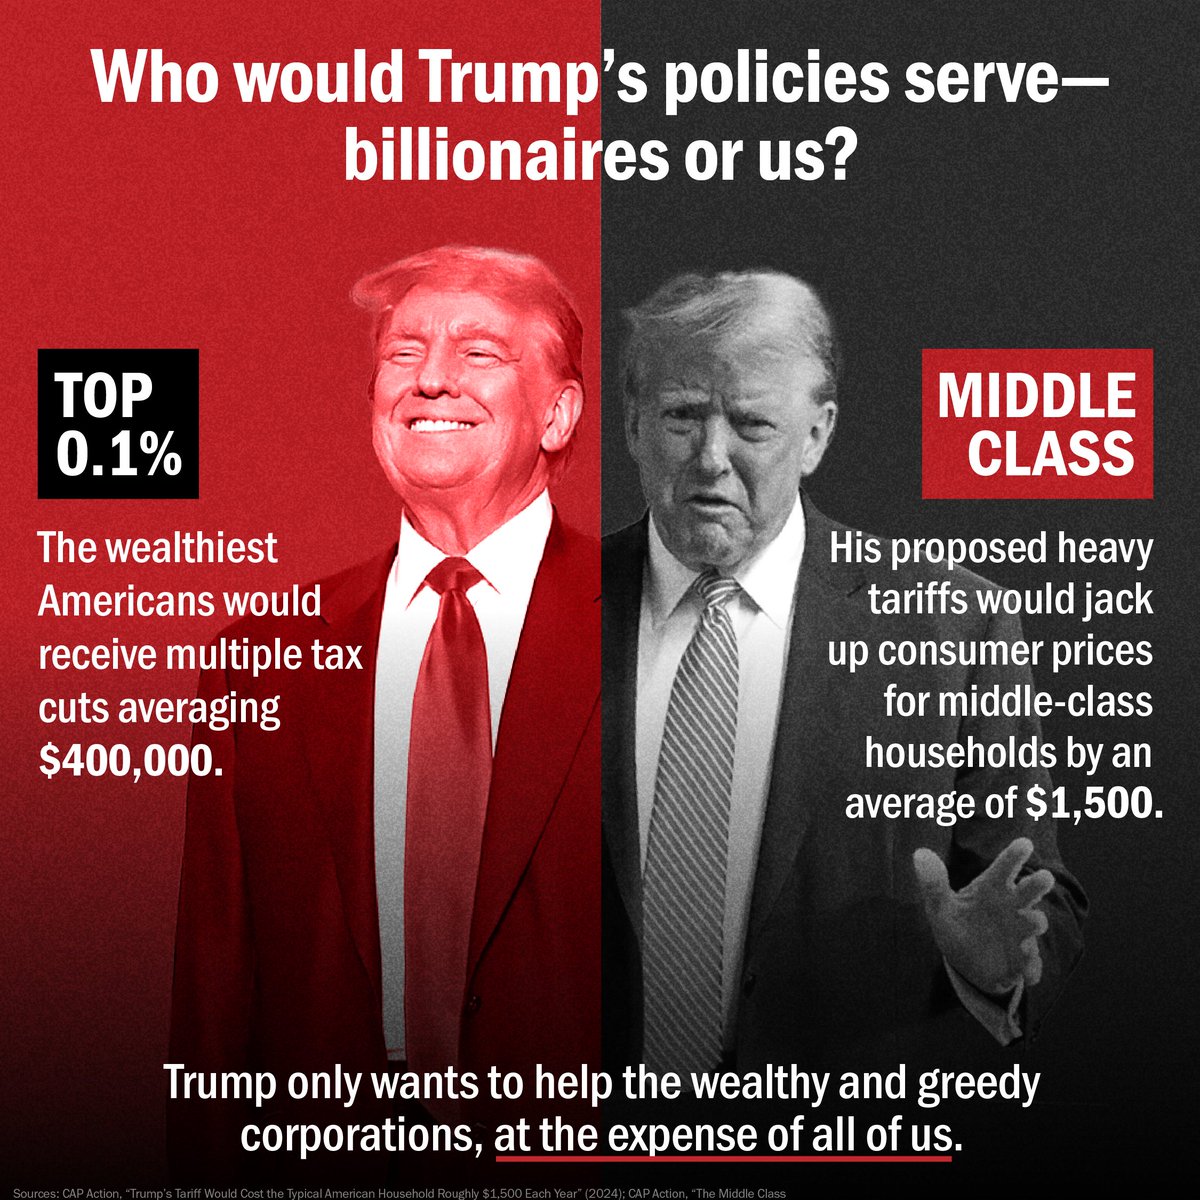 Trump’s policies benefit his billionaires buddies—not hardworking Americans.